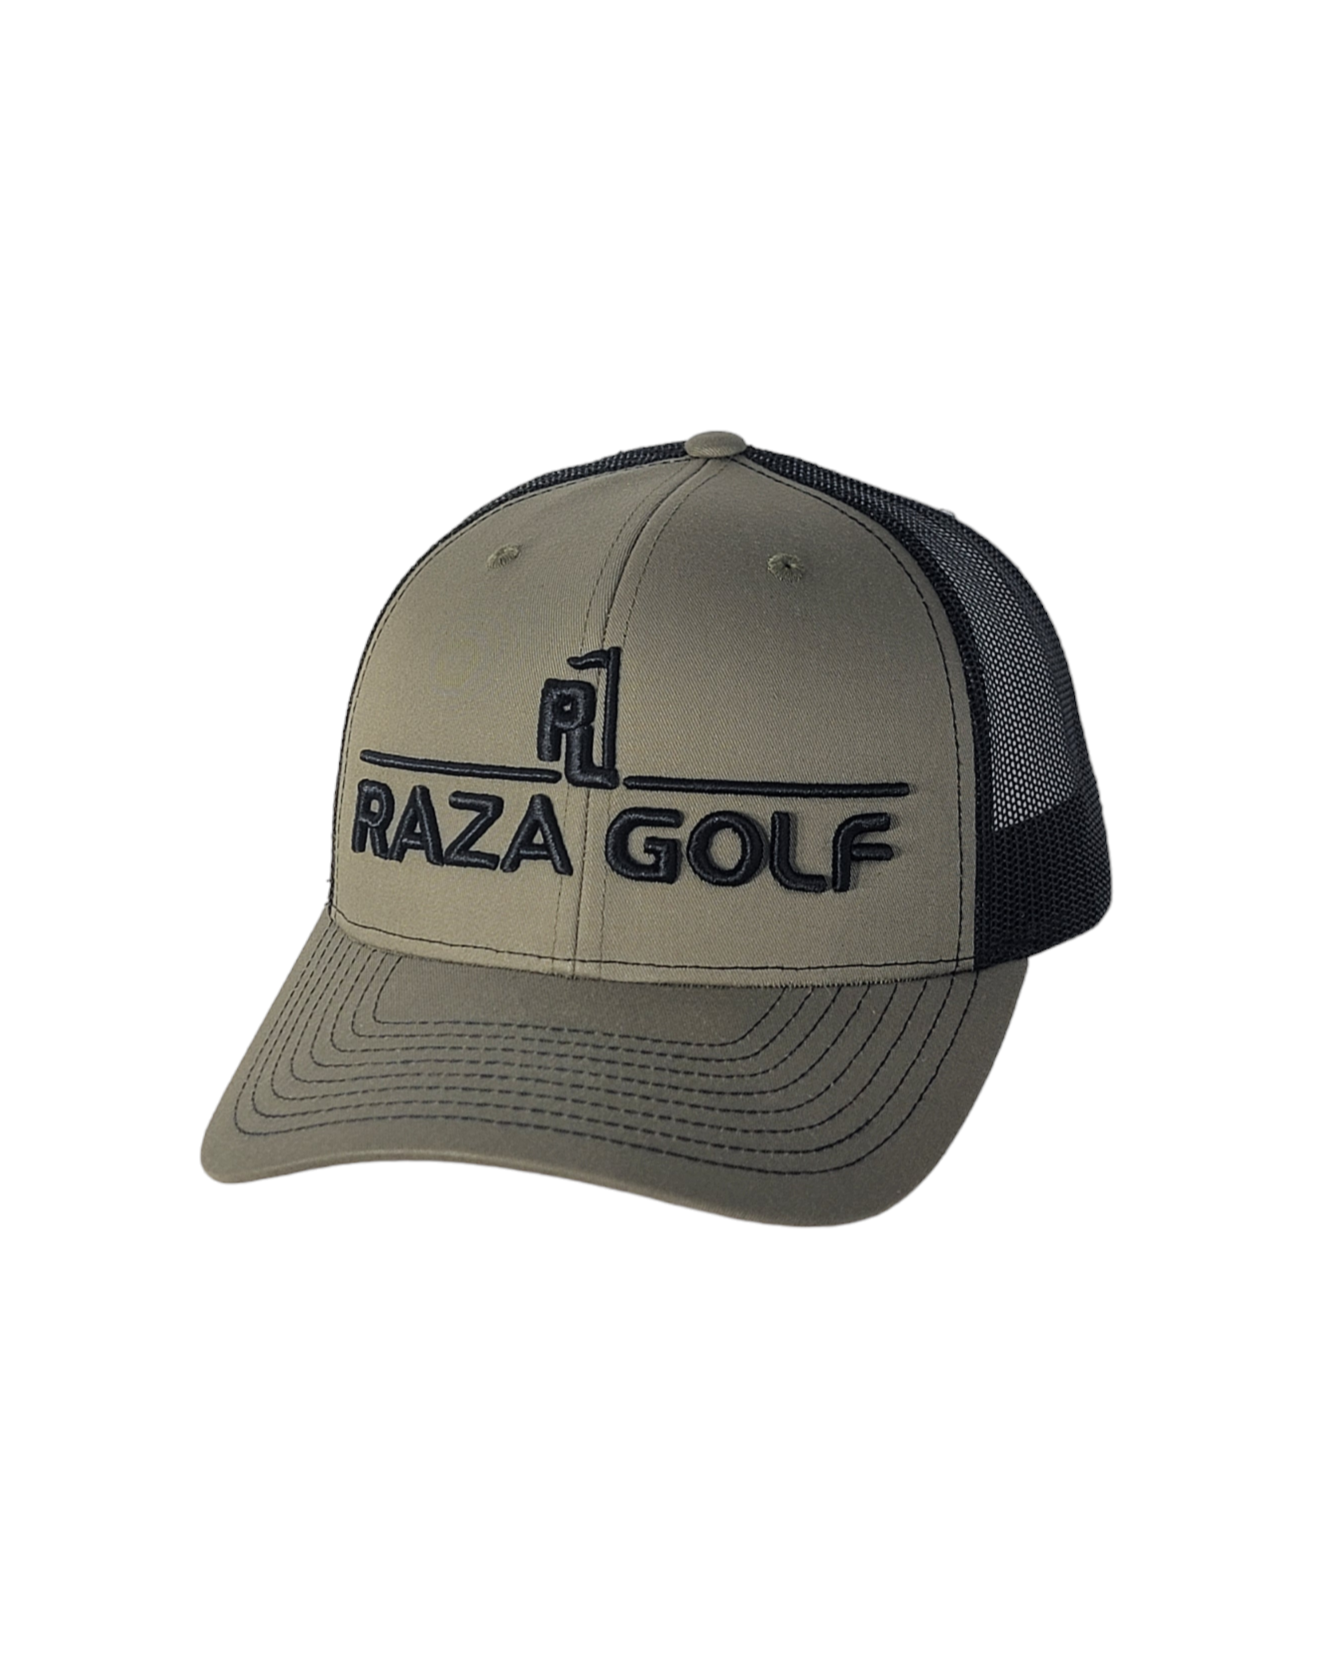 Raza Golf Loden/Black Linear Trucker Hat